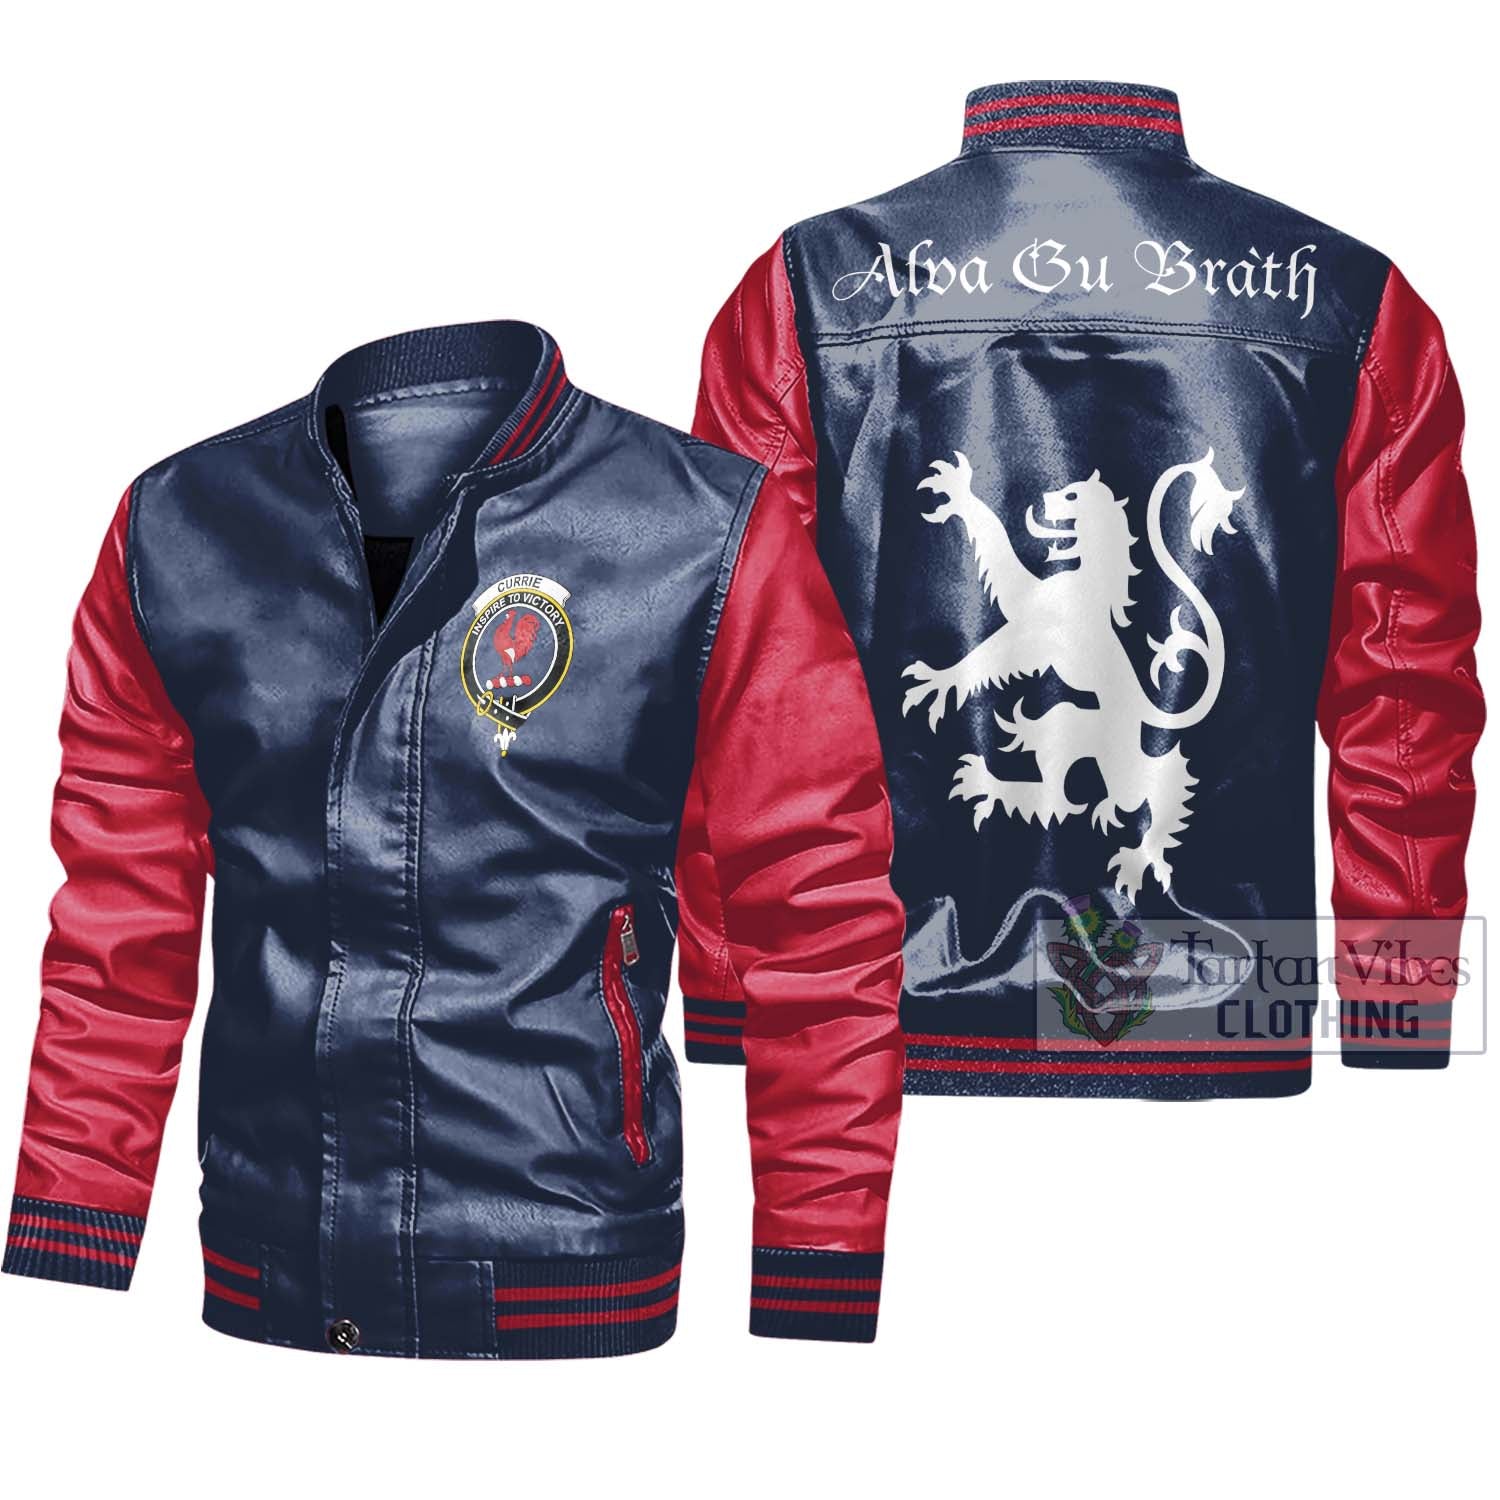 Tartan Vibes Clothing Currie Family Crest Leather Bomber Jacket Lion Rampant Alba Gu Brath Style